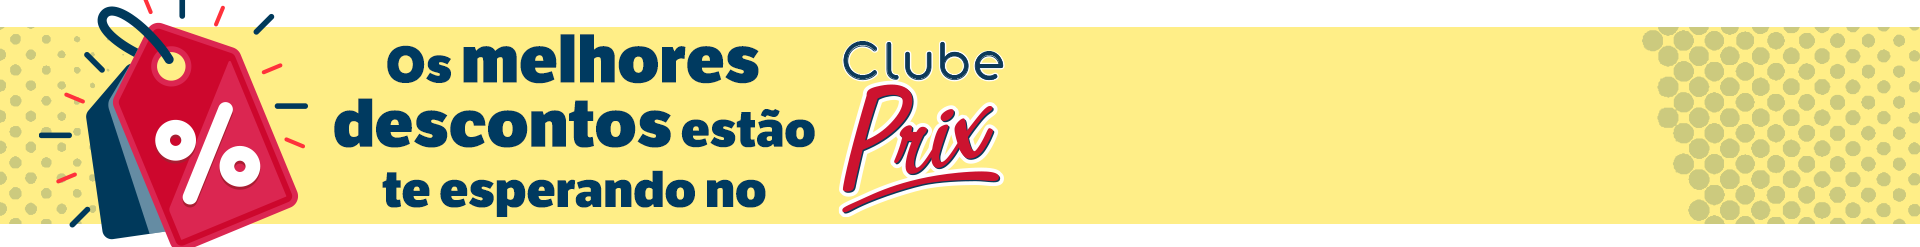 clubeprix - banner